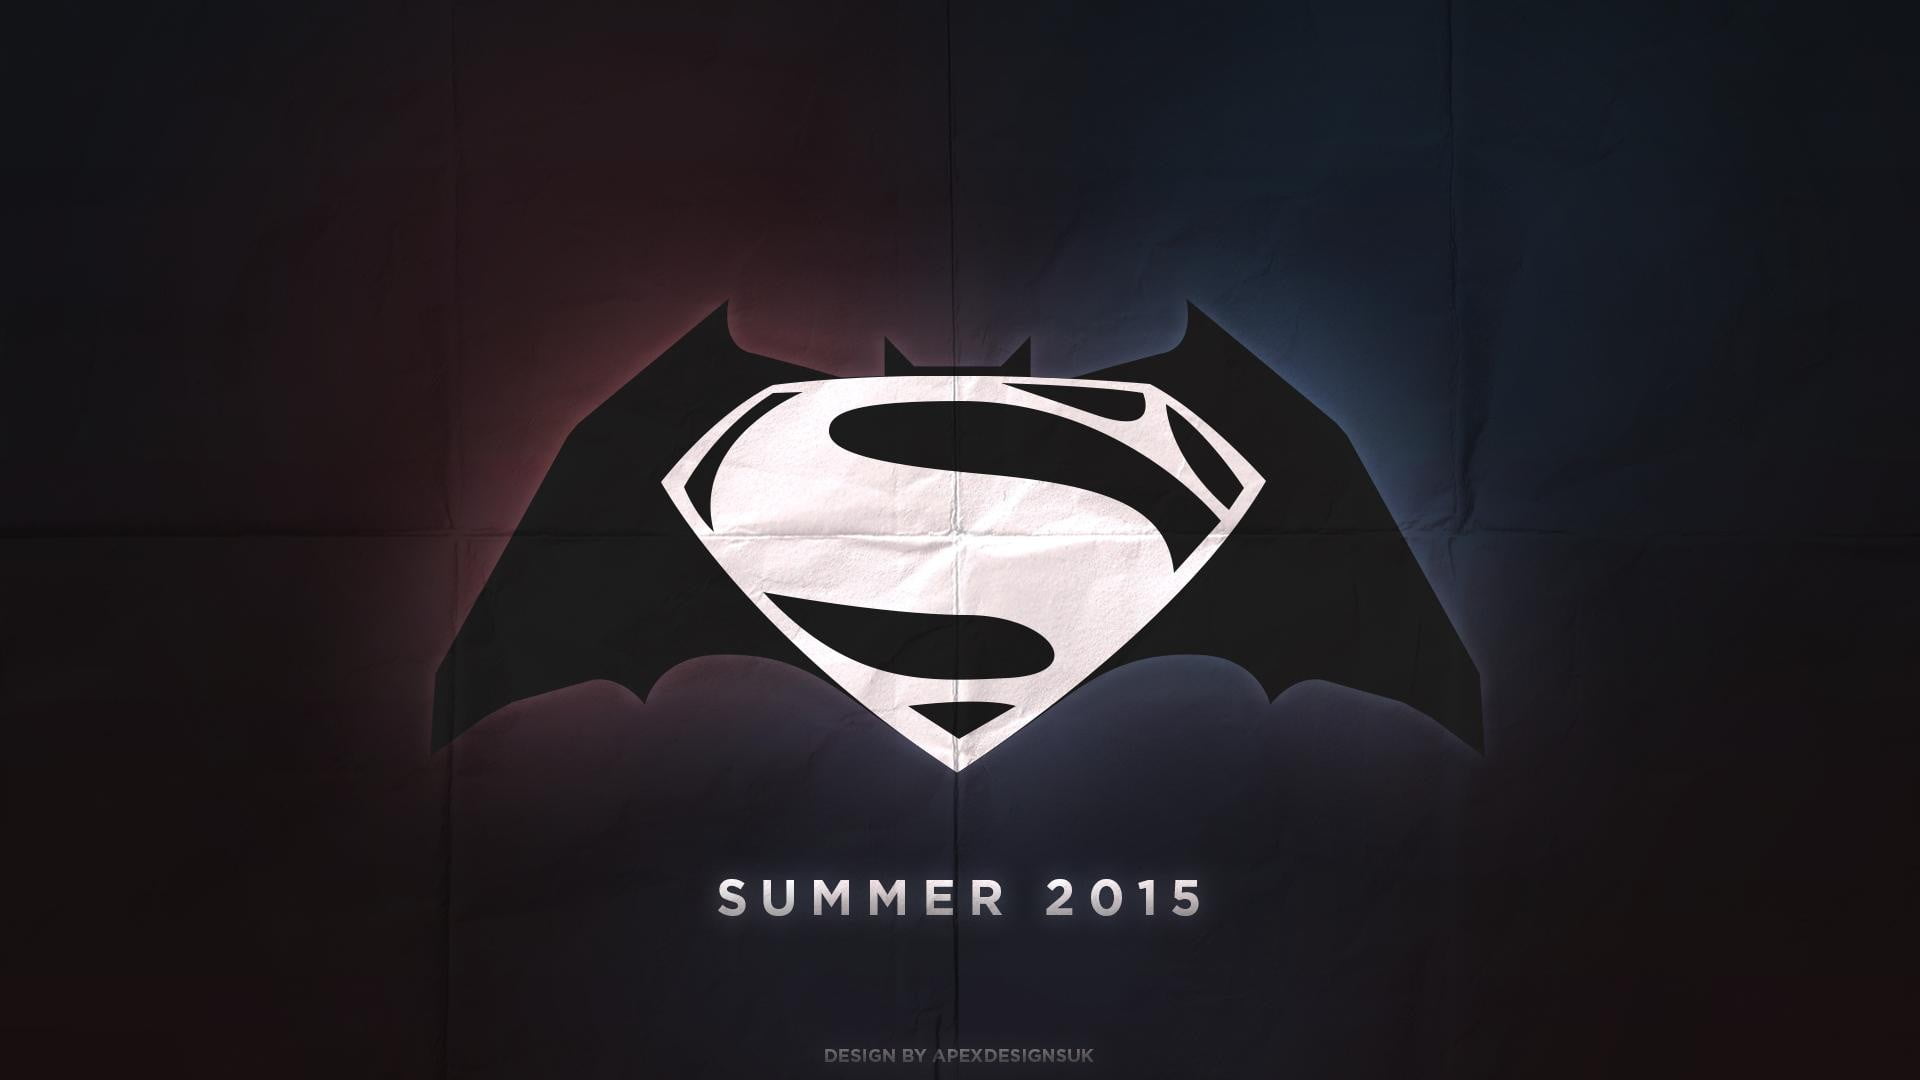 Batman and Superman logo illustration, Batman v Superman: Dawn of Justice